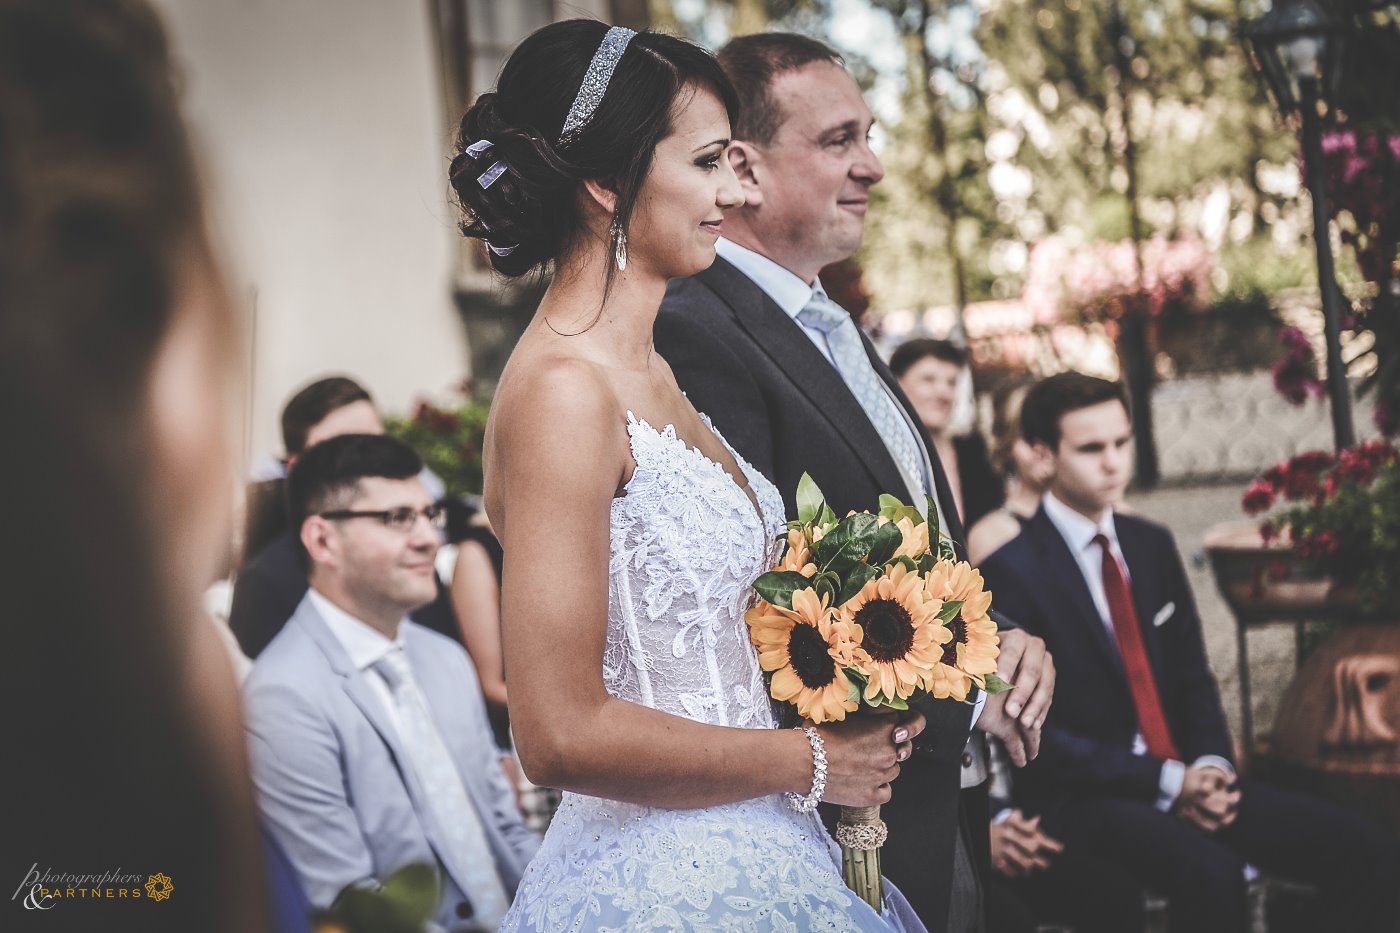 Martyna & Piotr wedding in Tuscany